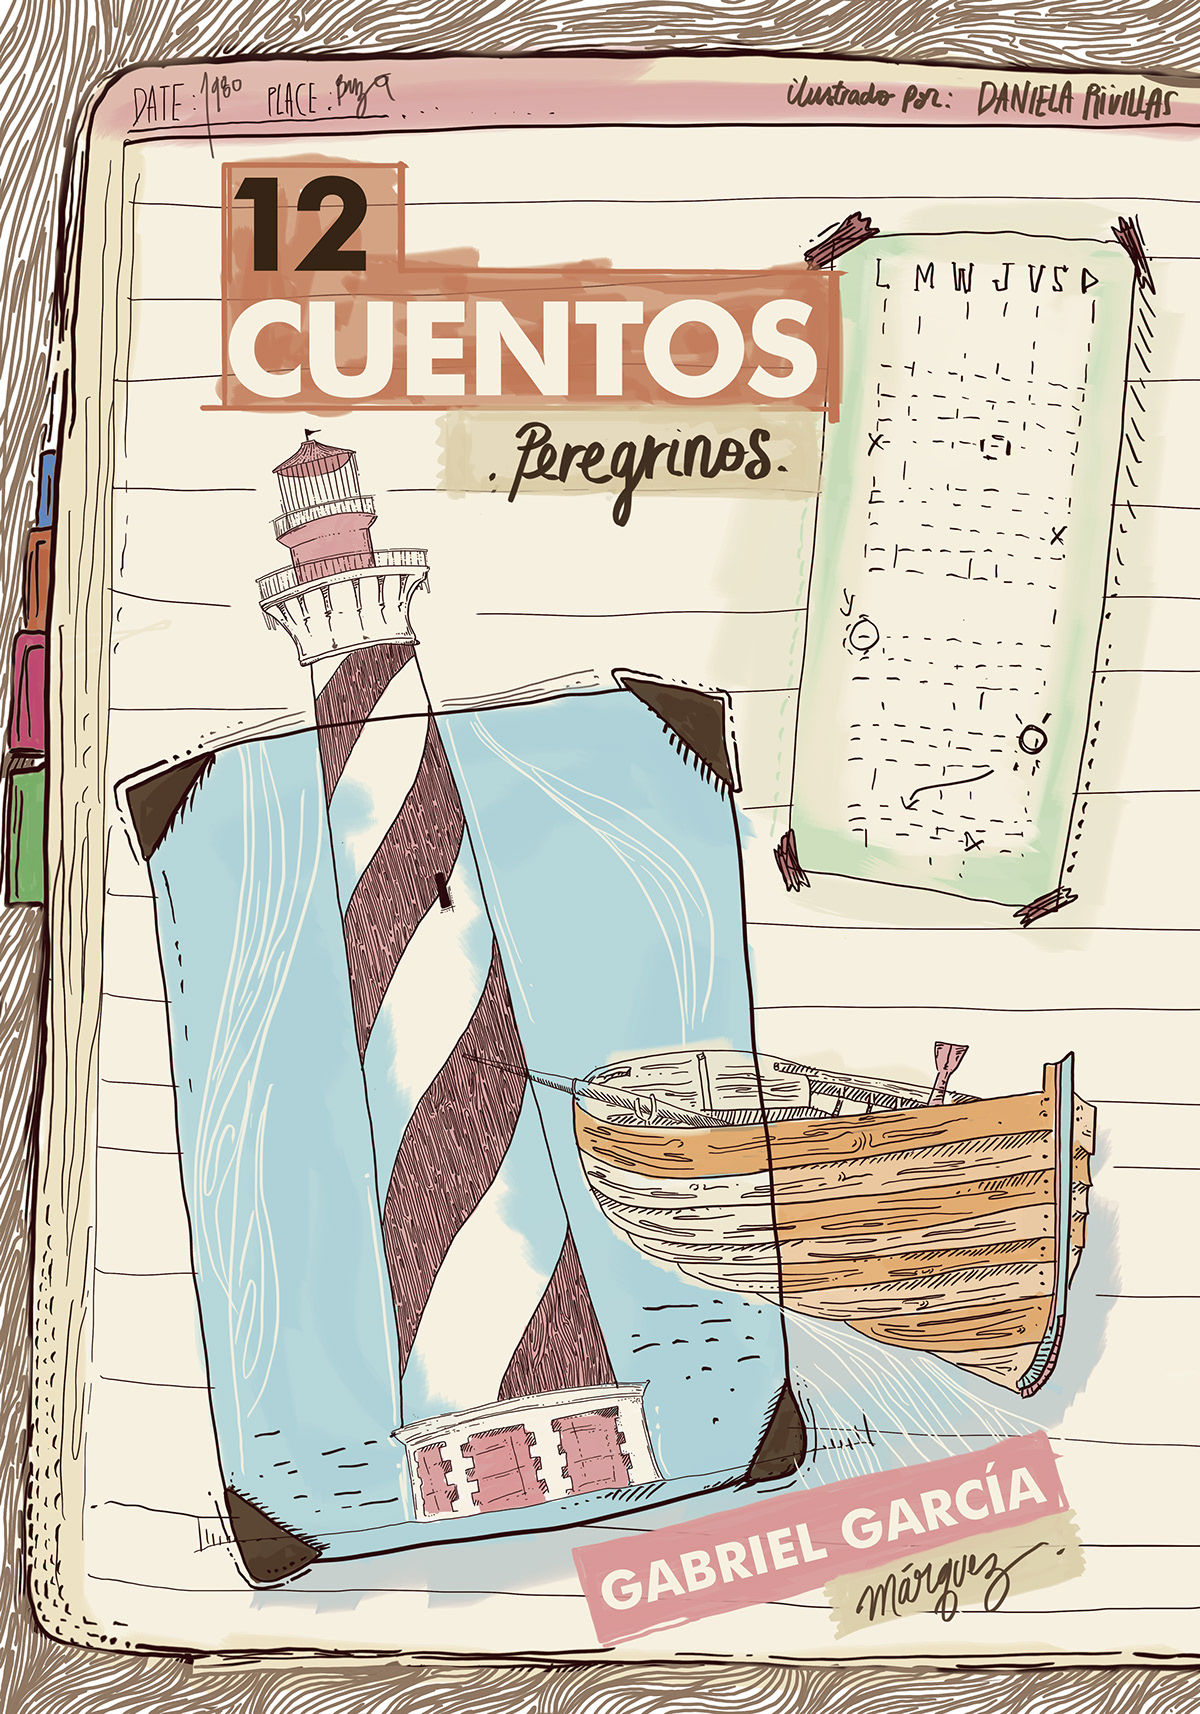 gabriel garcia marquez journal art jounalism collage sketch cuentos objects Cases places buildings